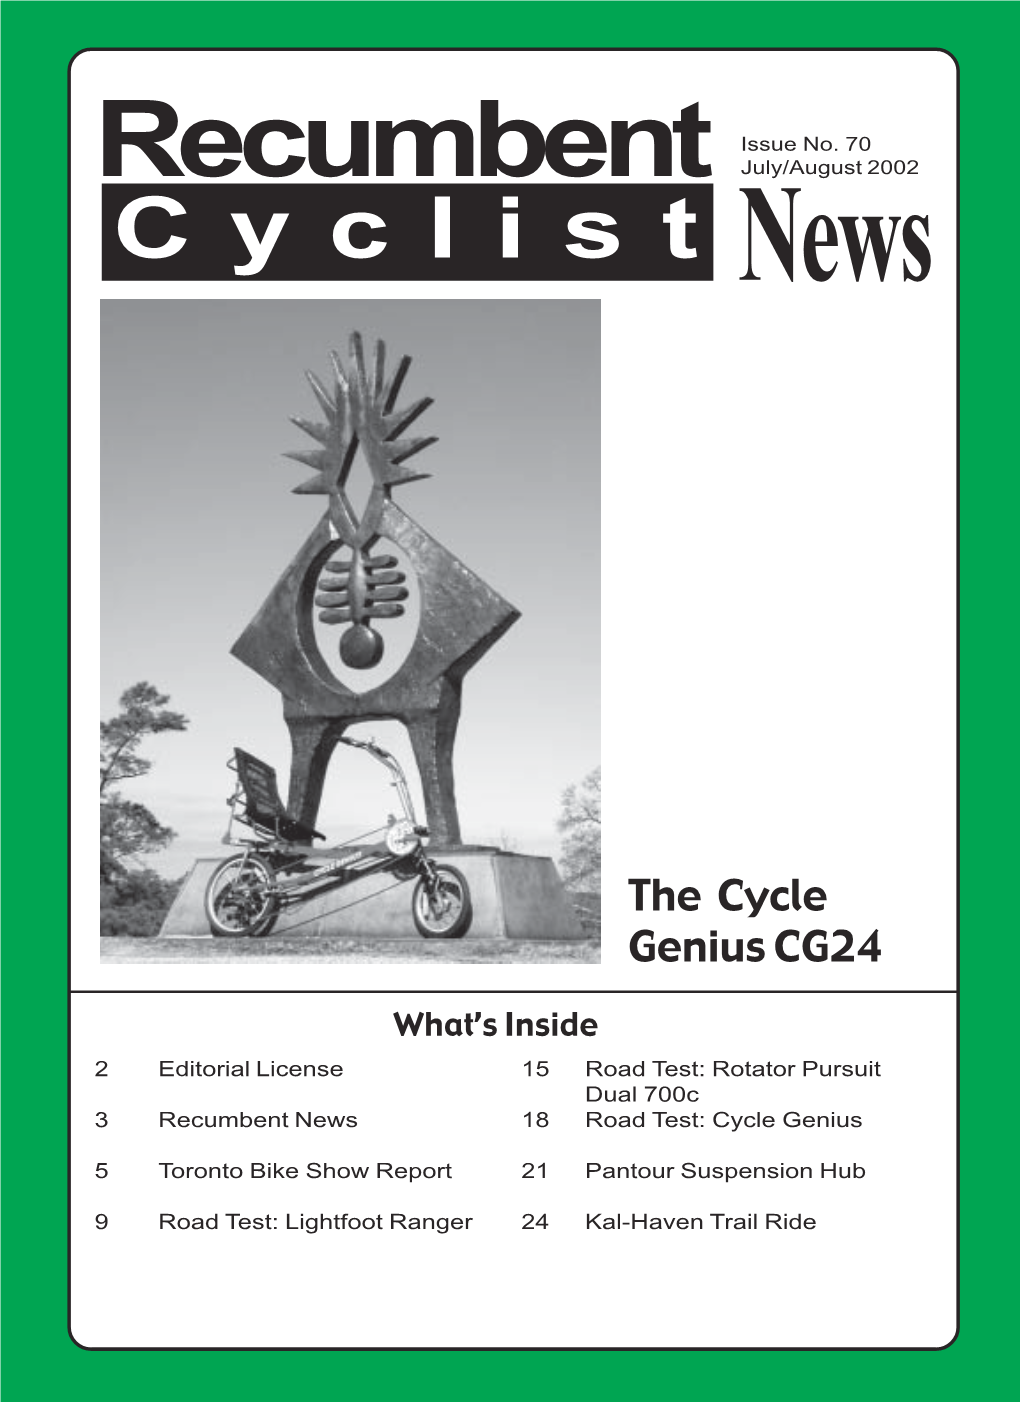 Recumbent Cyclist News